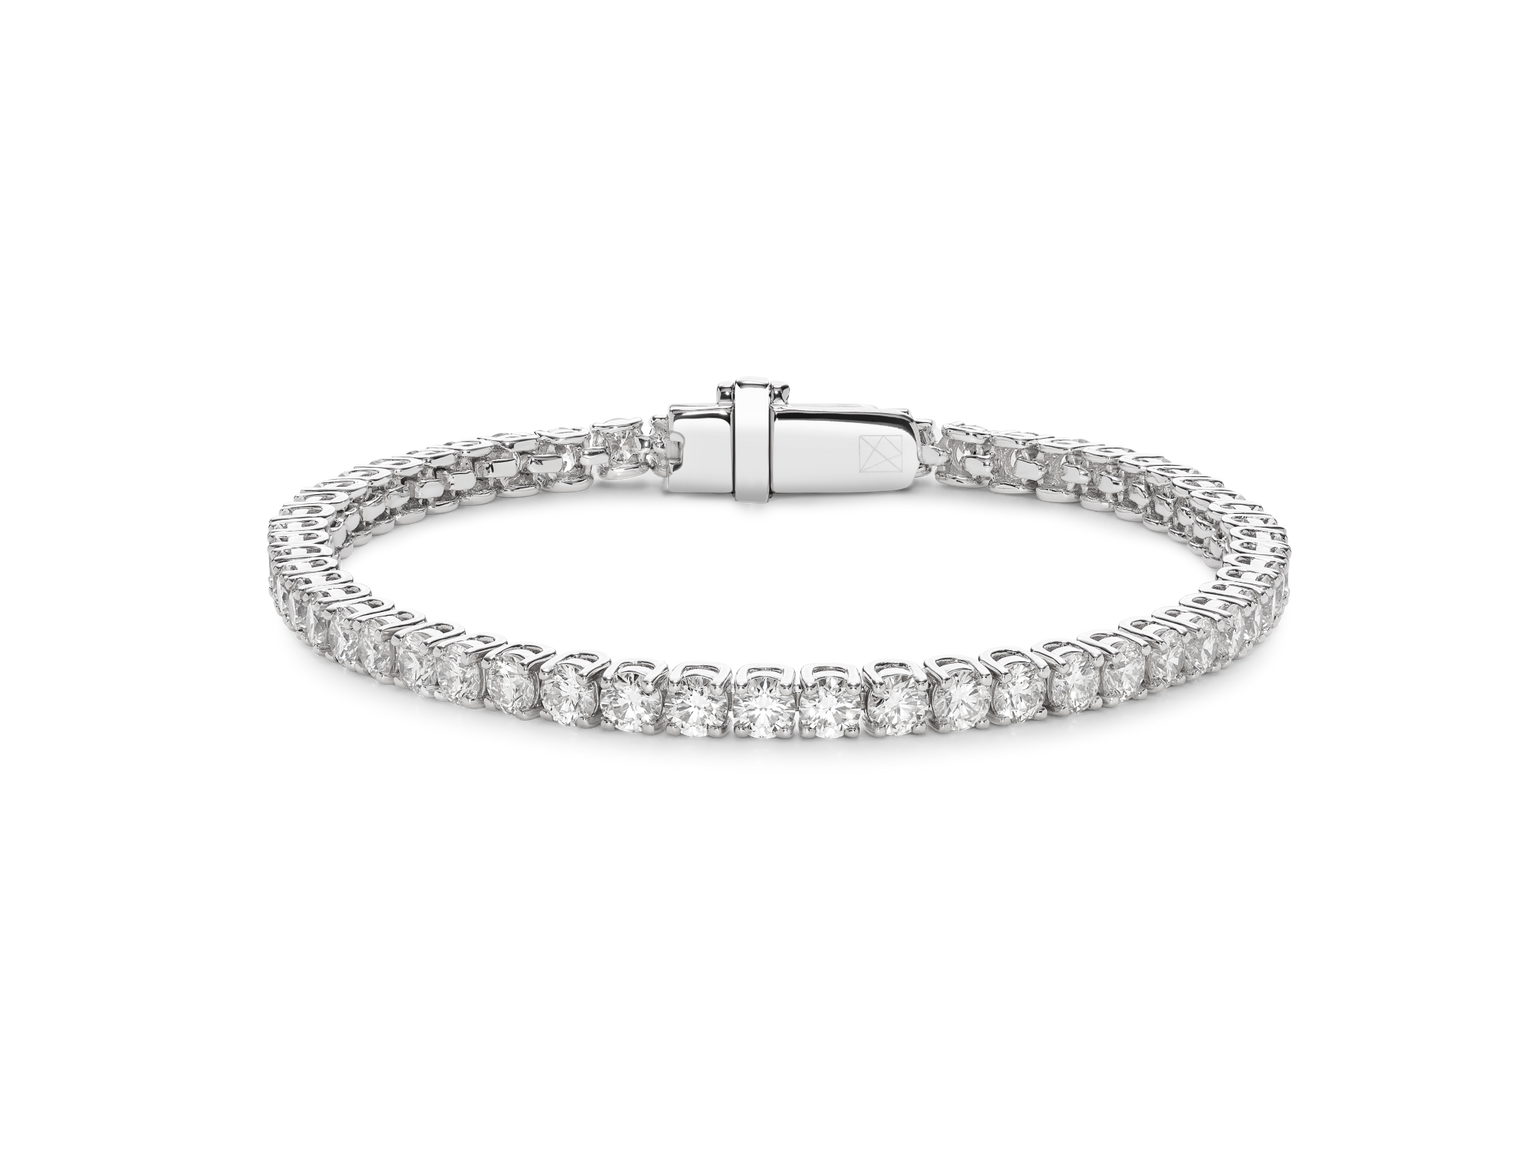 Lab-Grown Diamond Small Tennis Bracelet - G/H color, 6.5" length | White